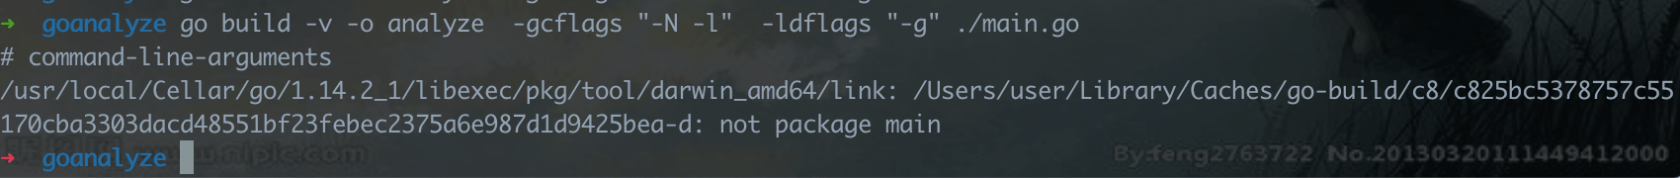 mac环境go build 增加参数-ldflags '-g'参数报错：not package main